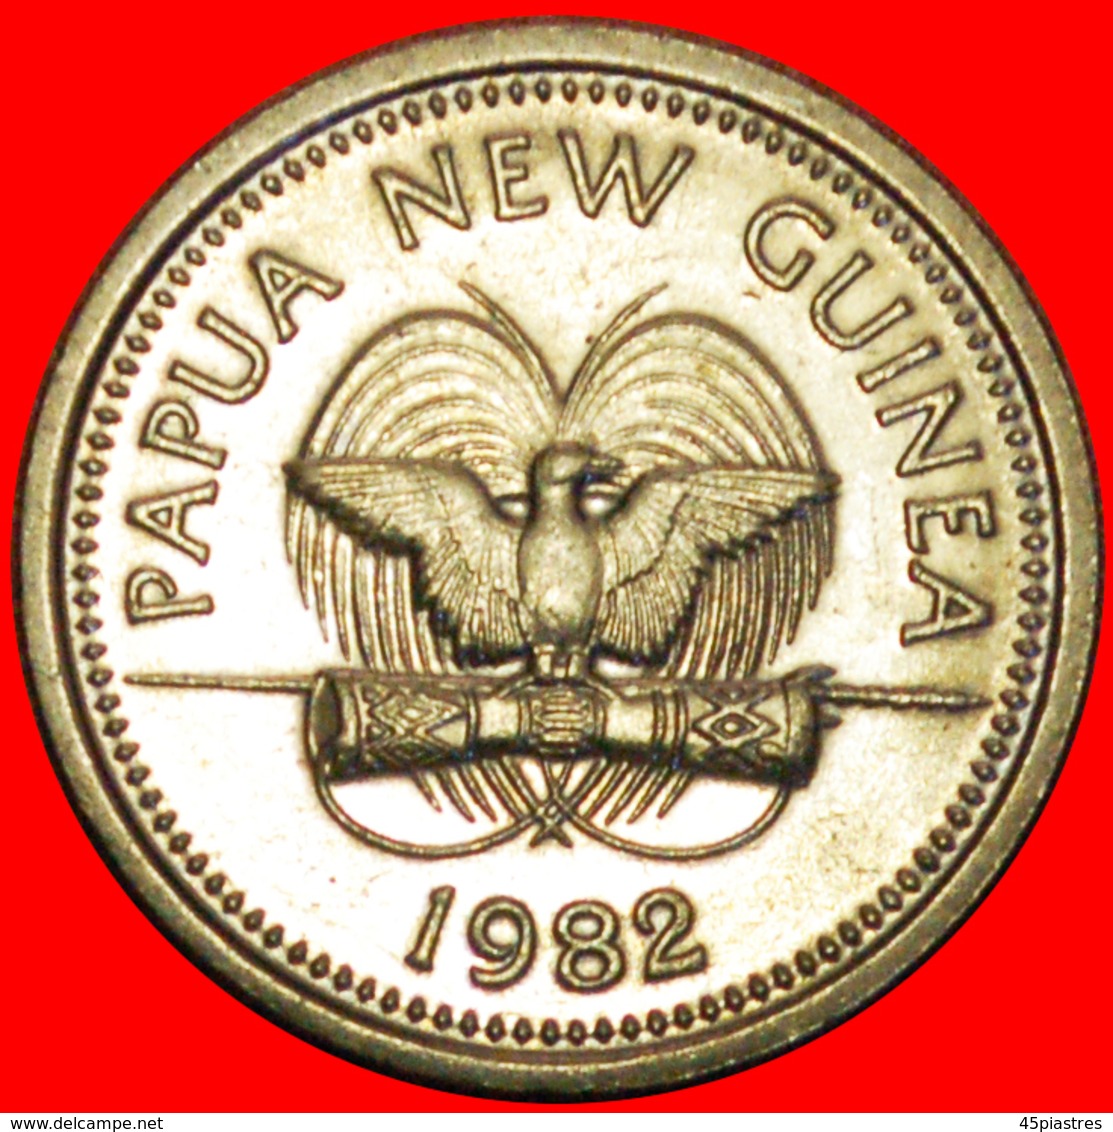 + GREAT BRITAIN TURTLE: PAPUA NEW GUINEA ★ 5 TOEA 1982 MINT LUSTER! LOW START ★ NO RESERVE! - Papoea-Nieuw-Guinea